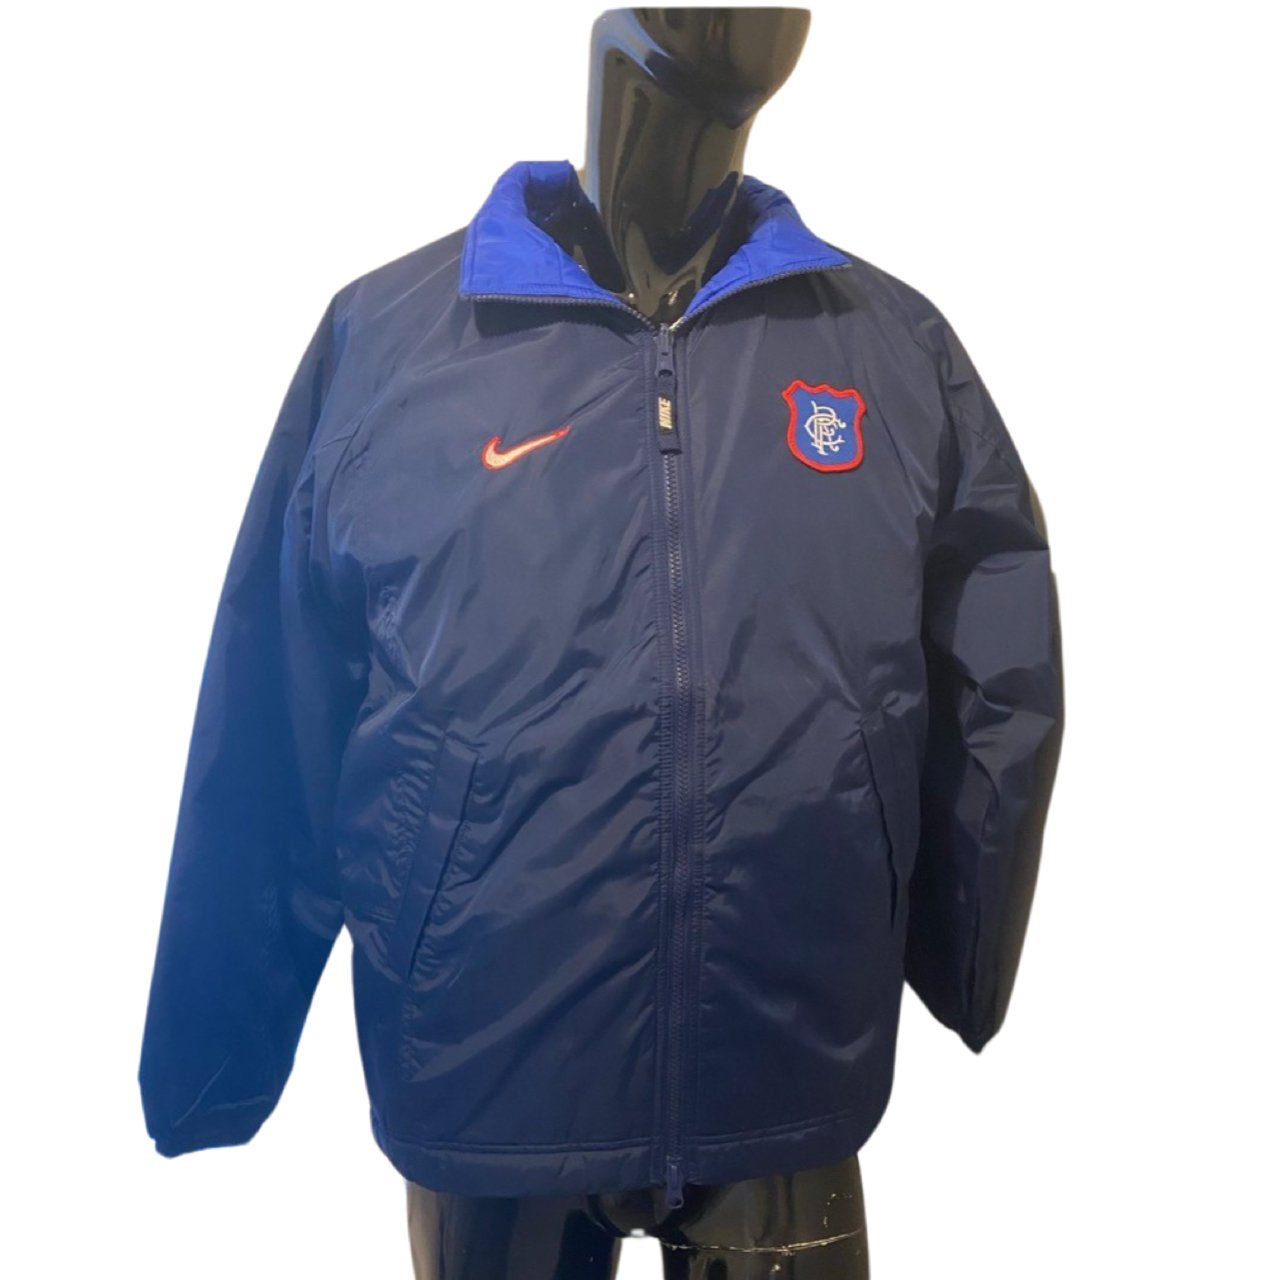 Nike Glasgow Rangers FC Retro Vintage Reversible Puffer Jacket - Boys size XL or Men size Small - Soul and Sense Streetwear